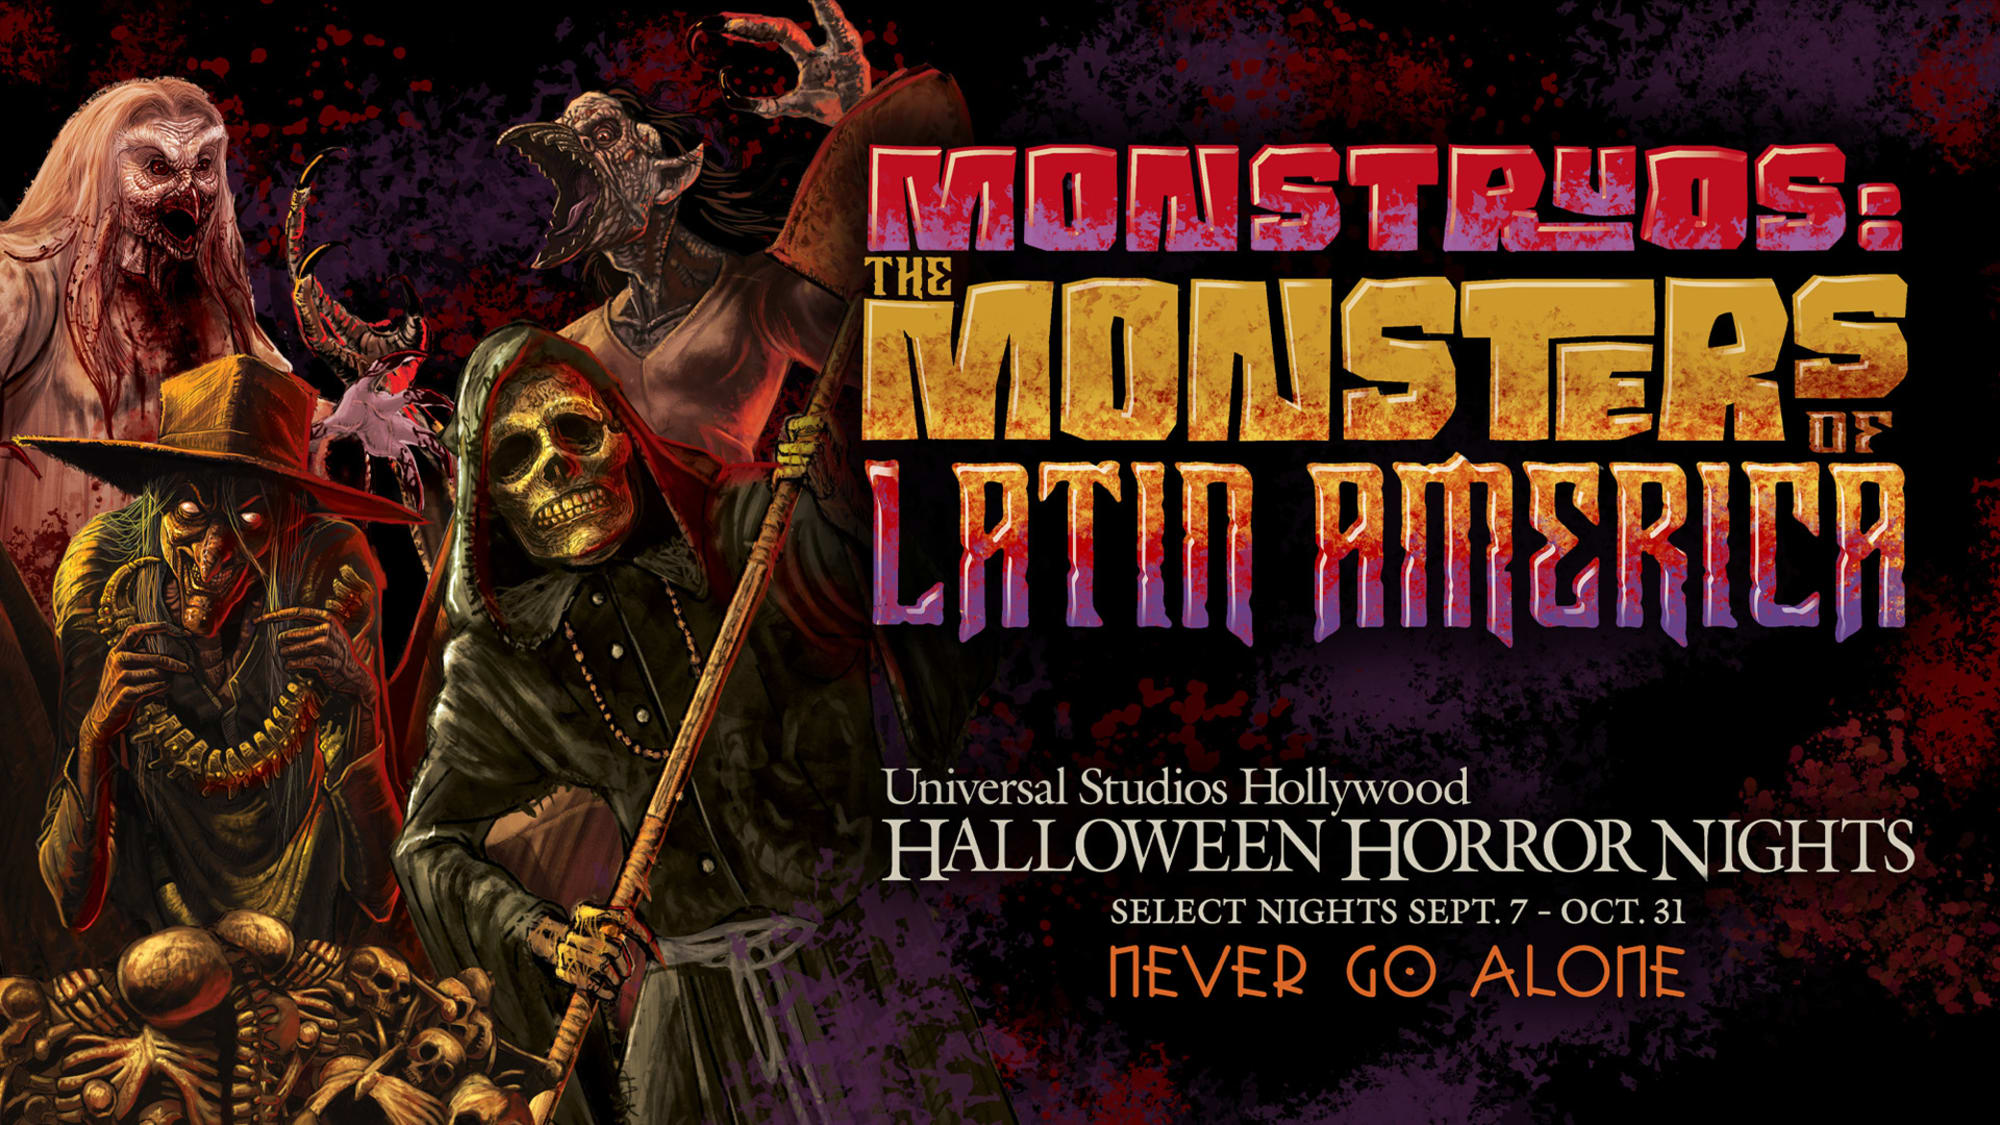 2023 Universal Studios Hollywood’s Halloween Horror Nights feeds that